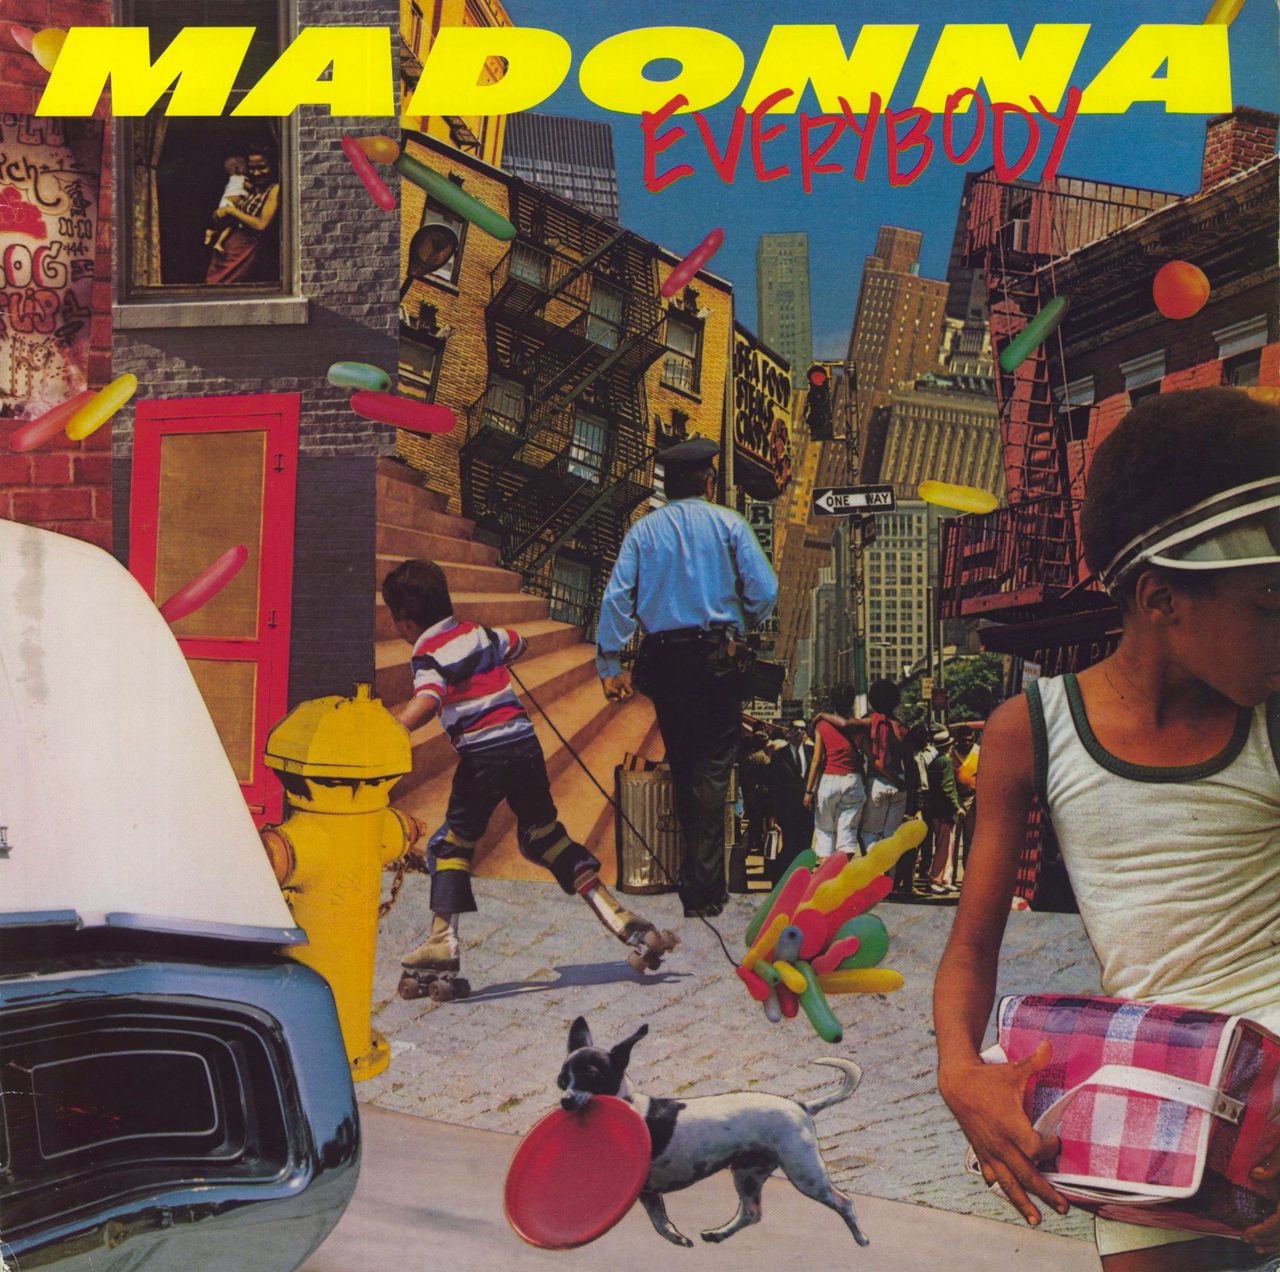 Madonna Everybody - Sire (R) - EX US 12